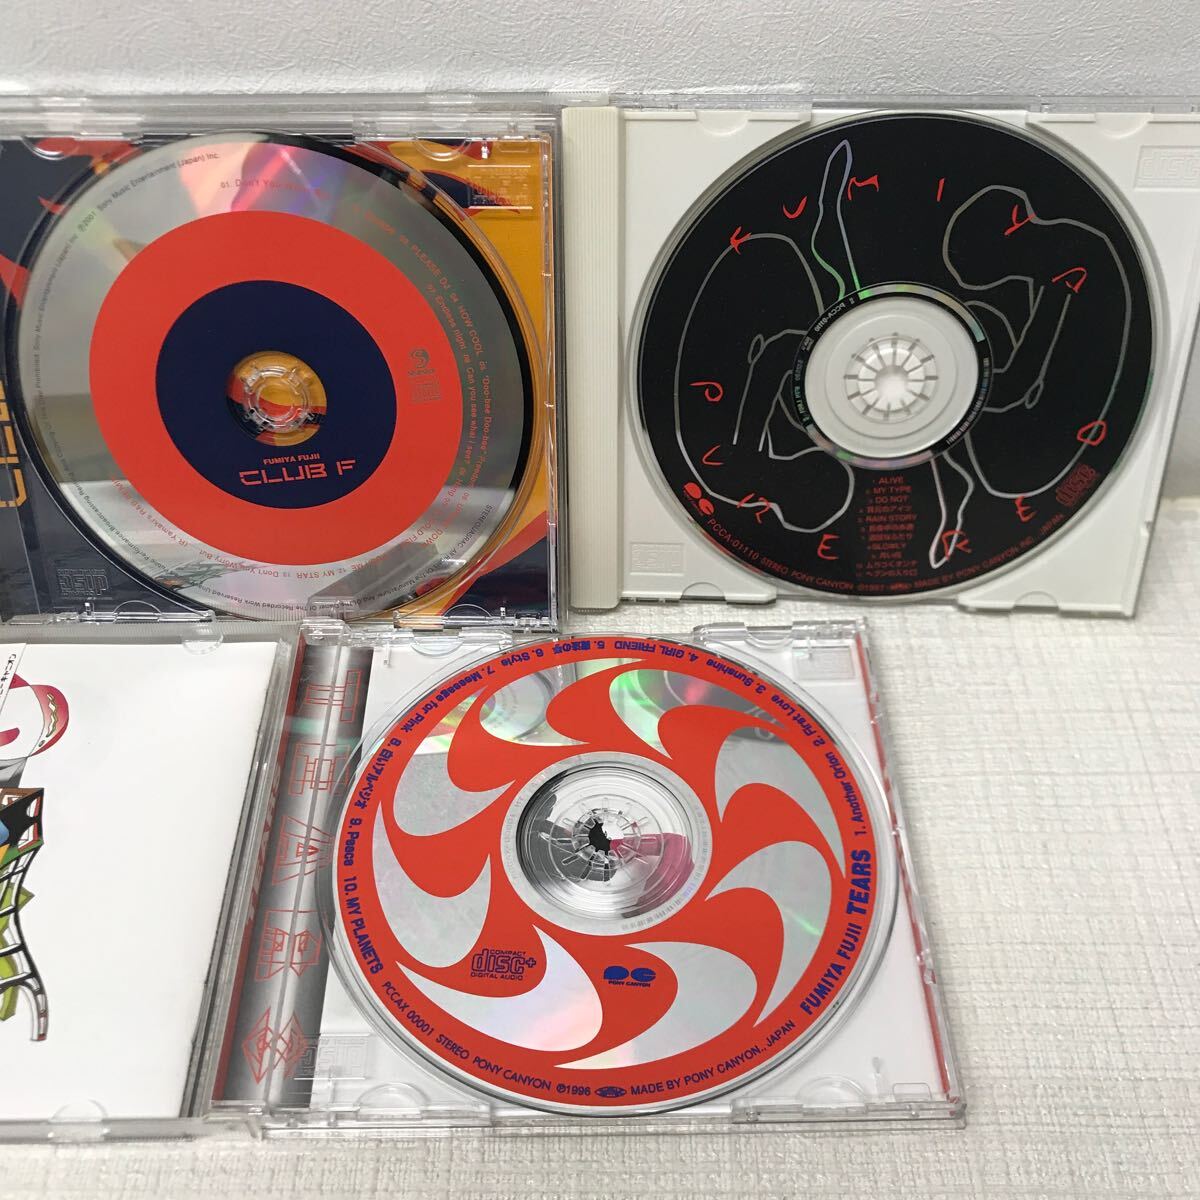 I0415C3 суммировать * Fujii Fumiya The Checkers CD 13 шт комплект музыка Японская музыка / цветок / GO / блокировка n roll / Angel / TEARS / CLUB F др. 